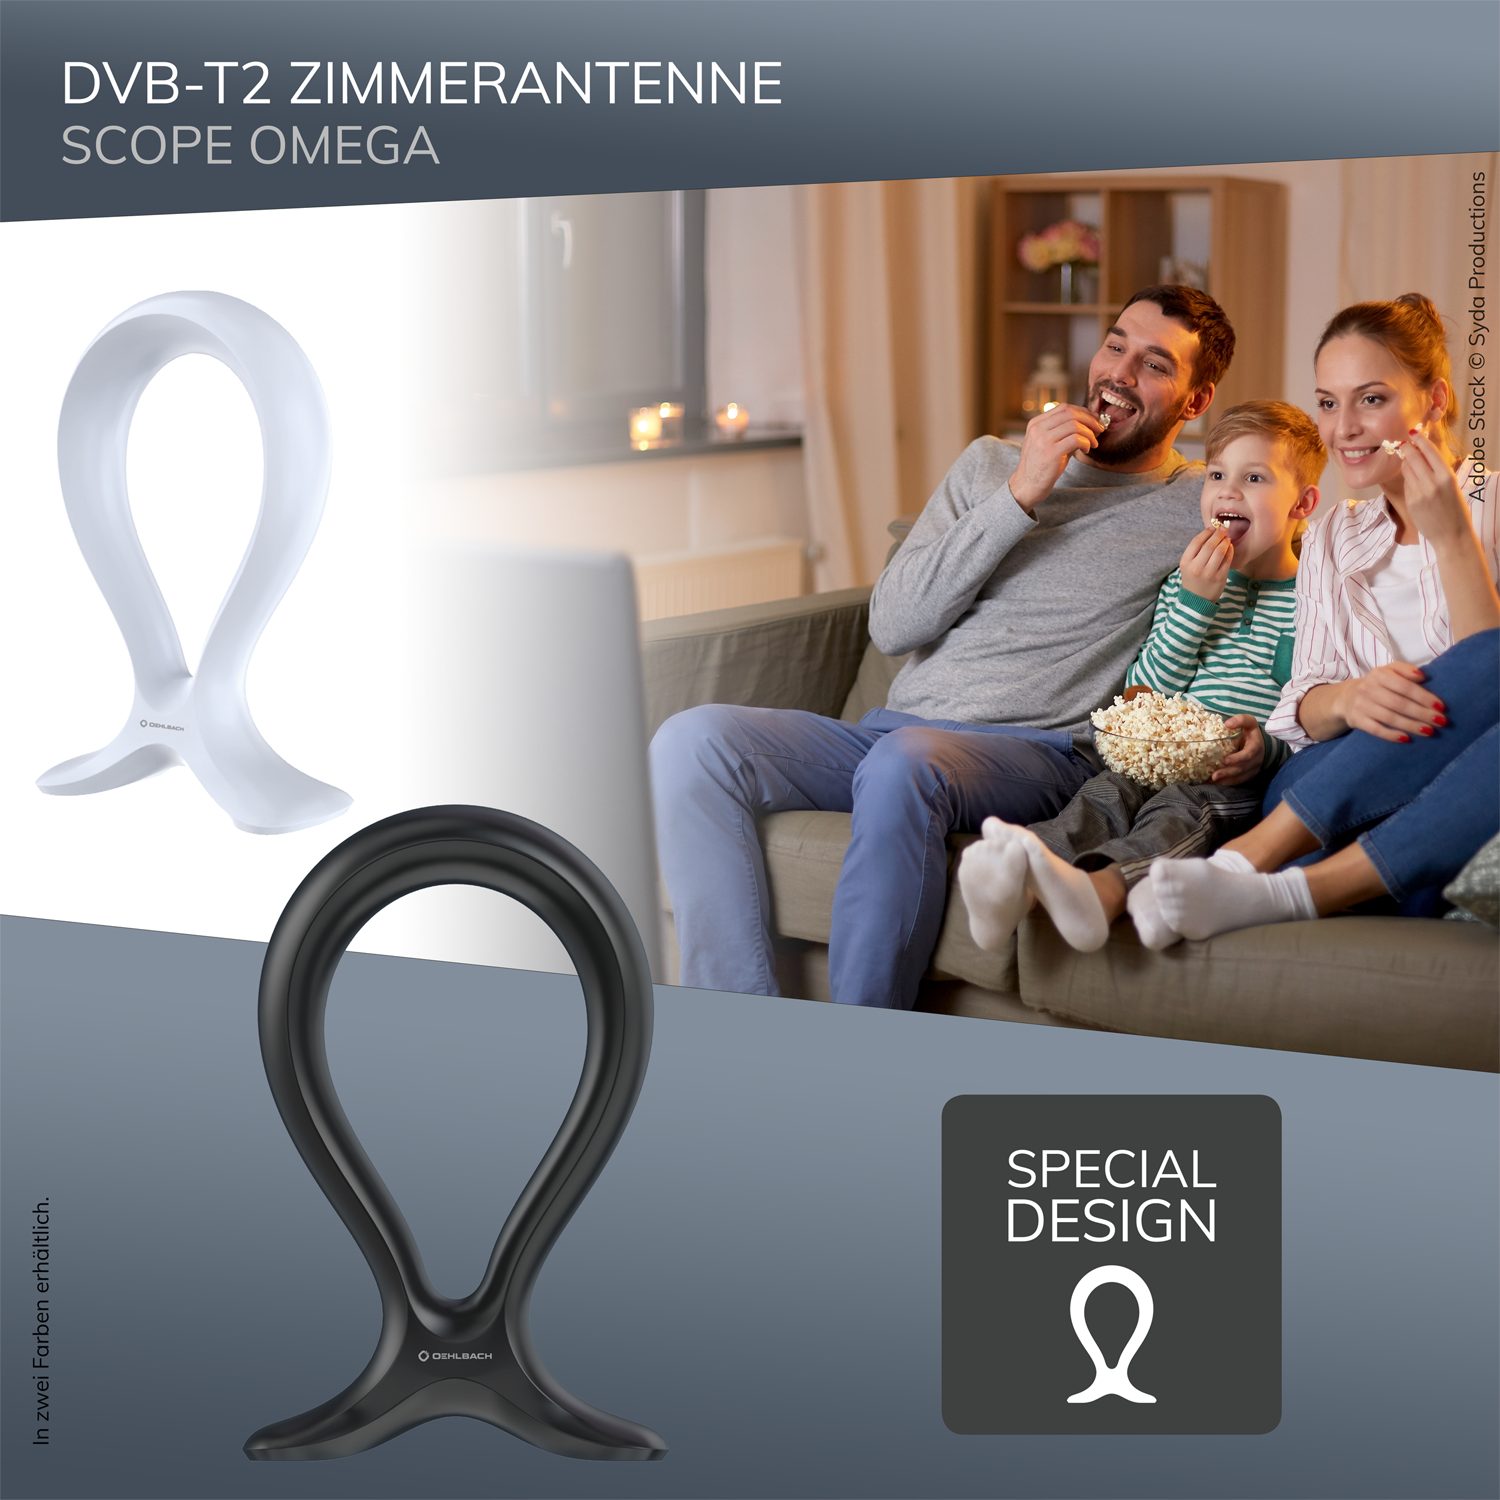 Oehlbach Scope Omega Zimmerantenne für Weiß (DVB-T2) Innenantenne DVB-T2